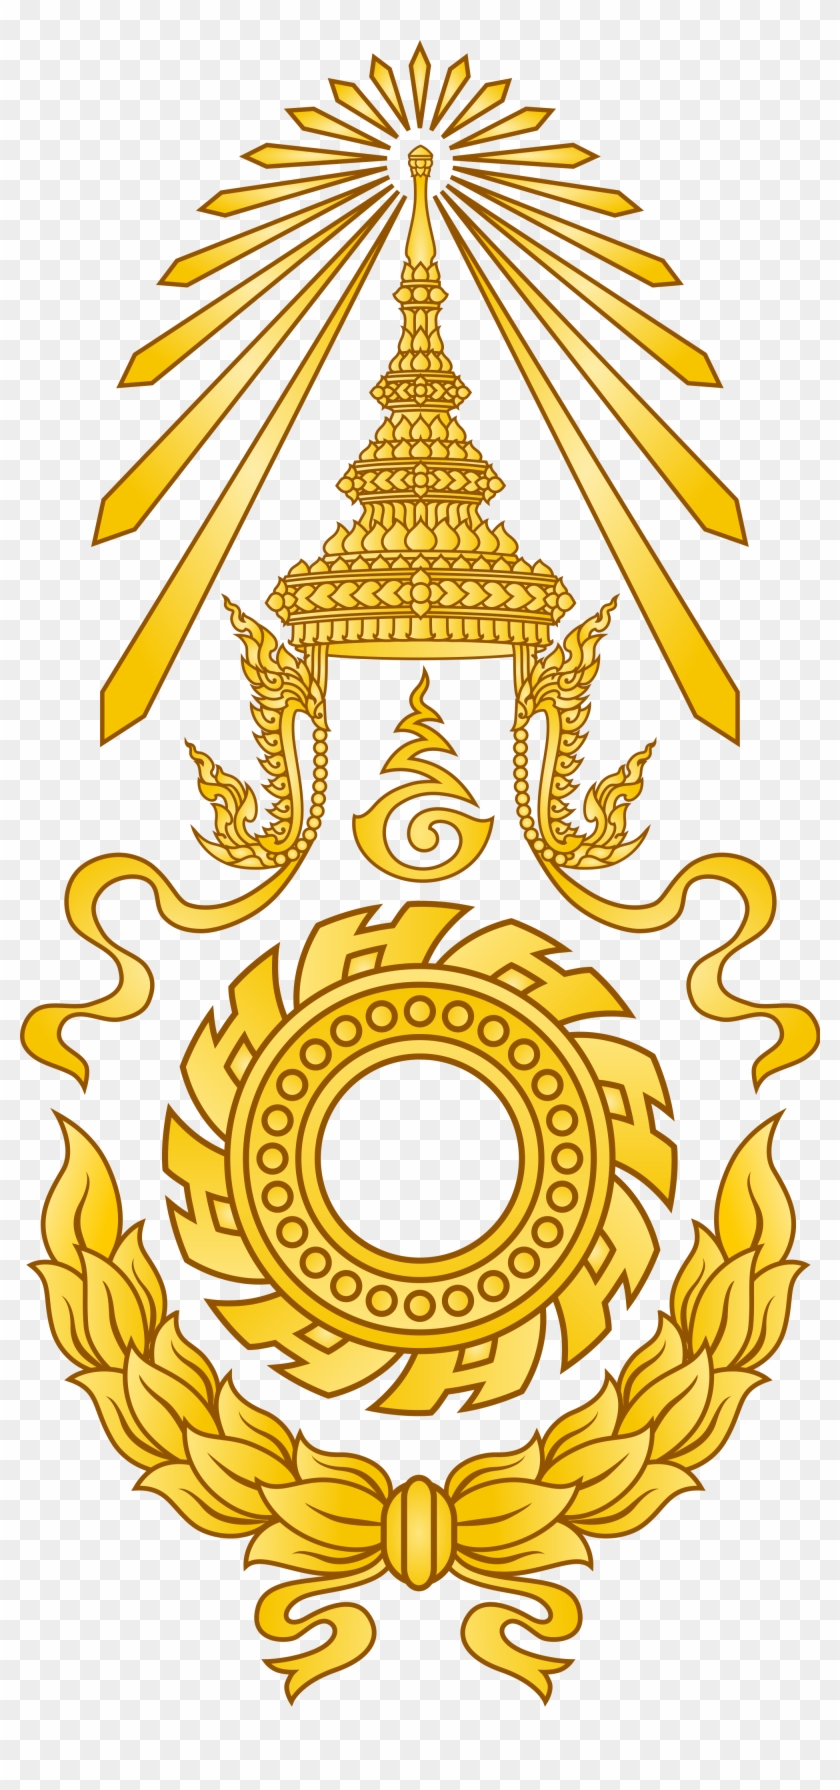 Emblem Of The Royal Thai Army - Royal Thai Army Clipart